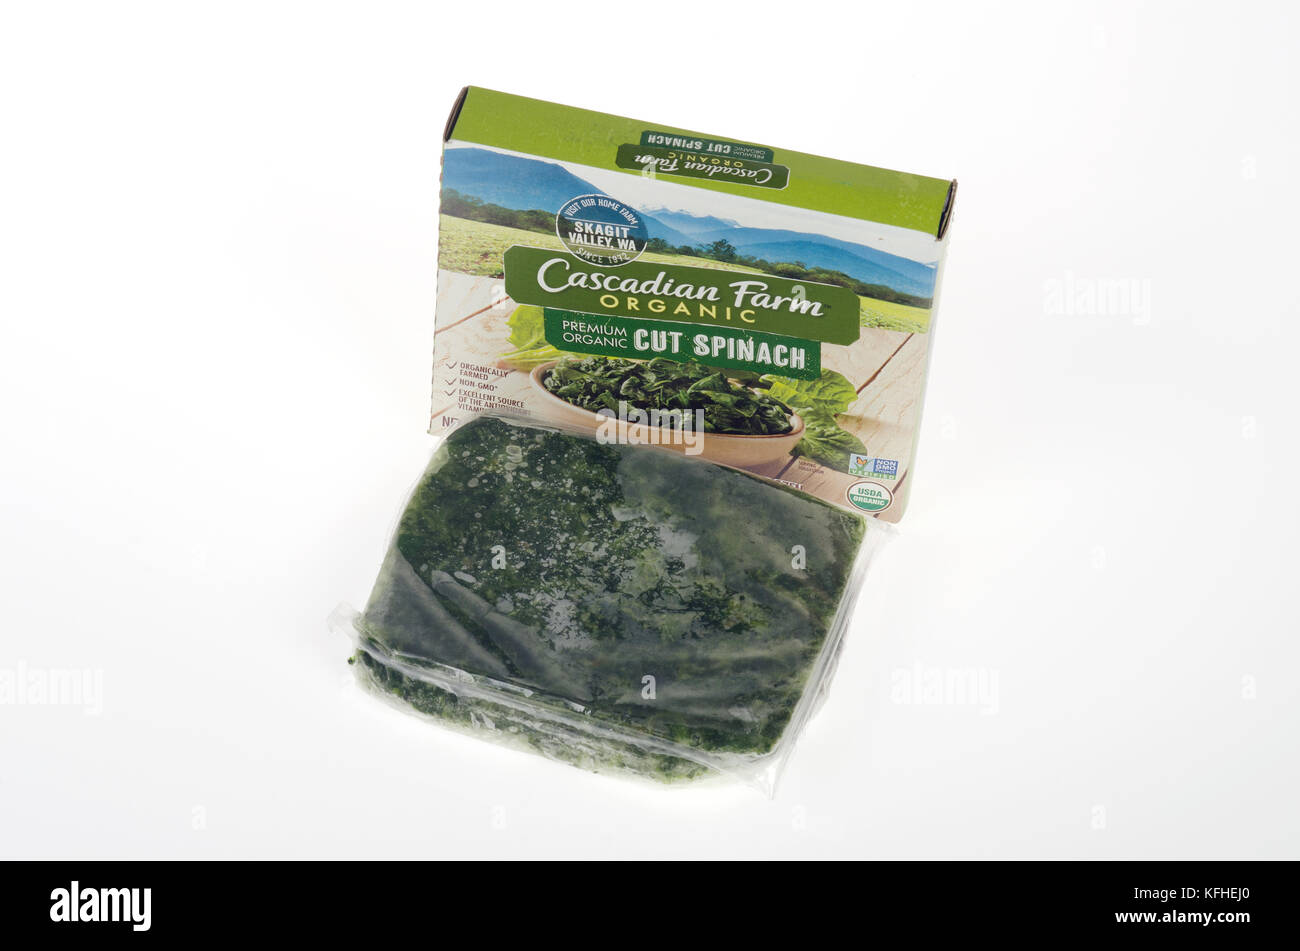 Cascadian Farm Frozen Organic Cut Spinach Stock Photo